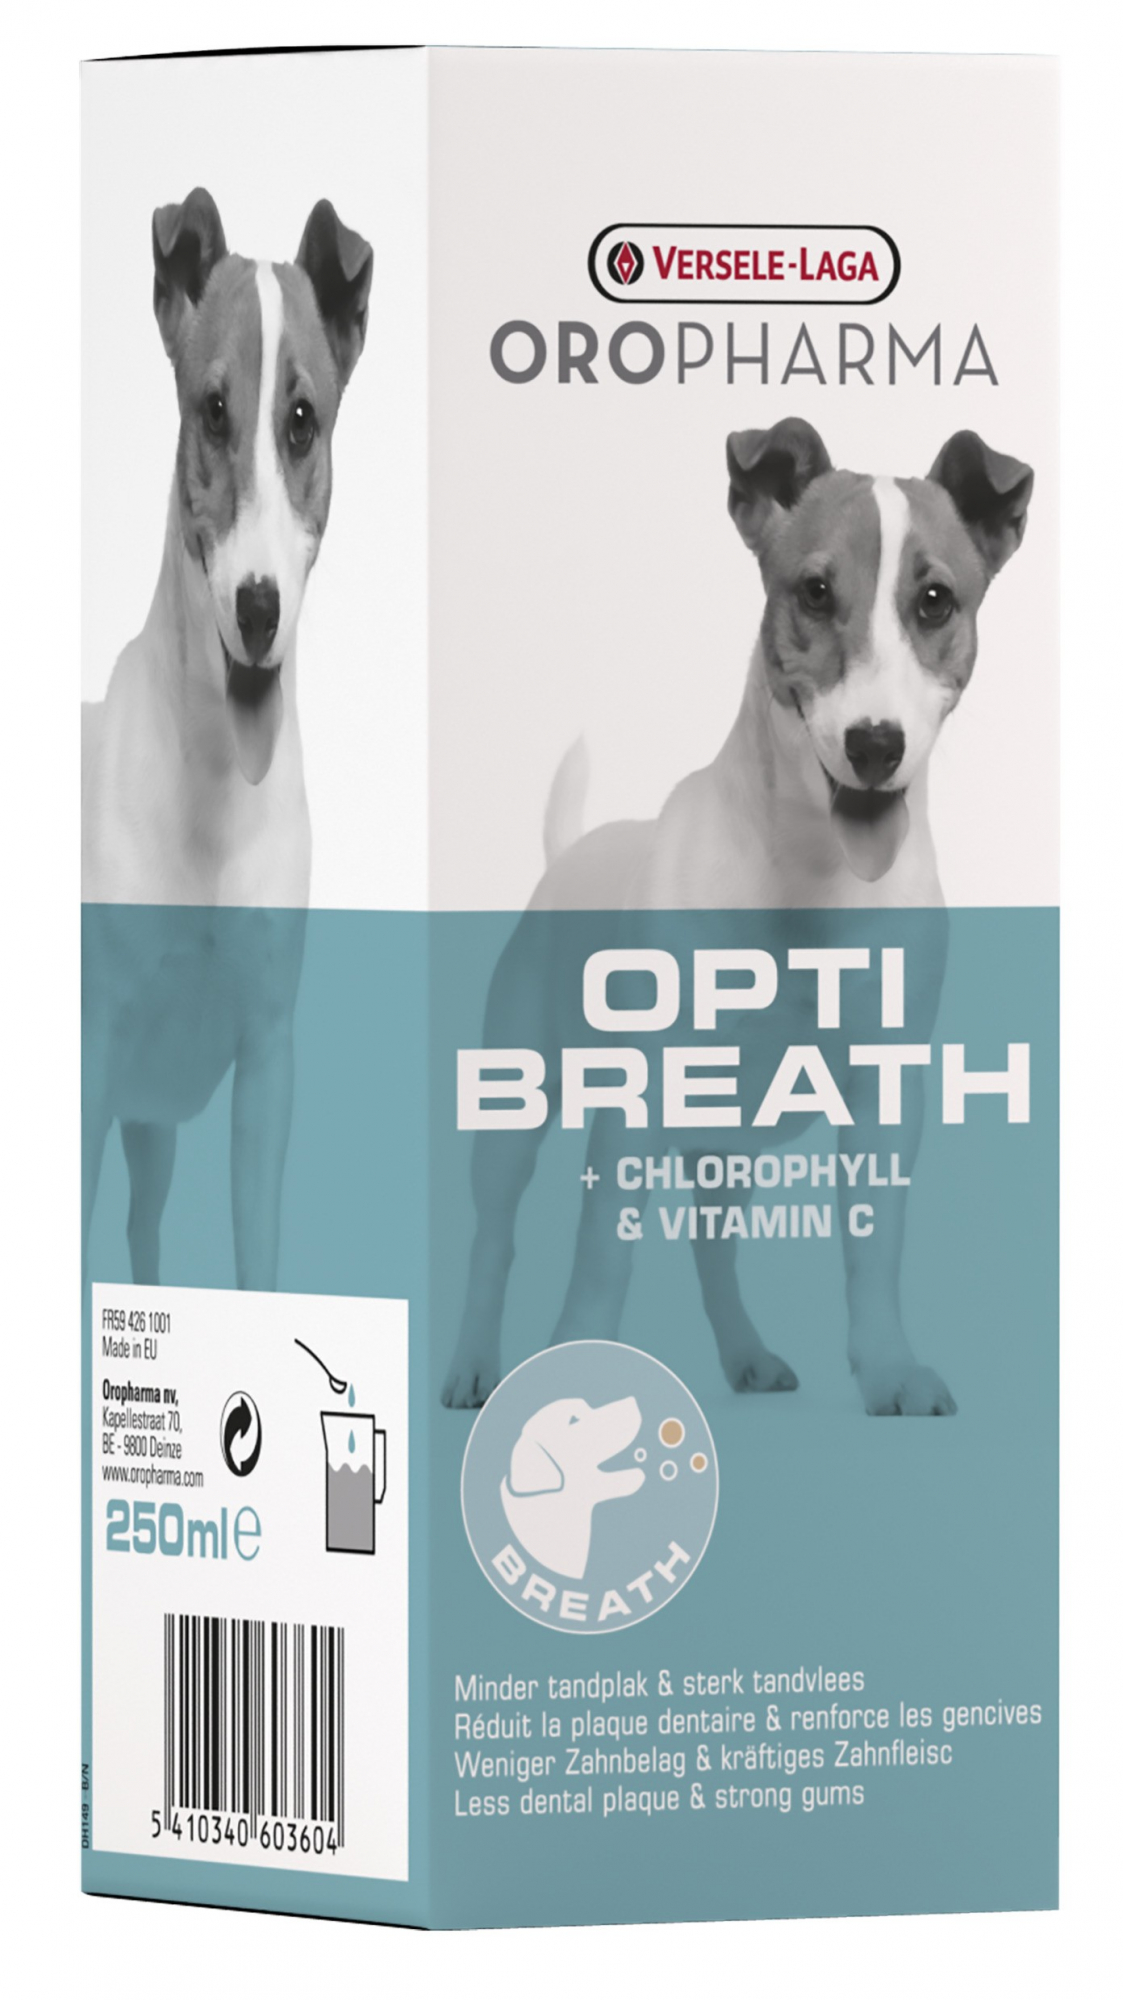 Oropharma Opti Breath - hálito agradável